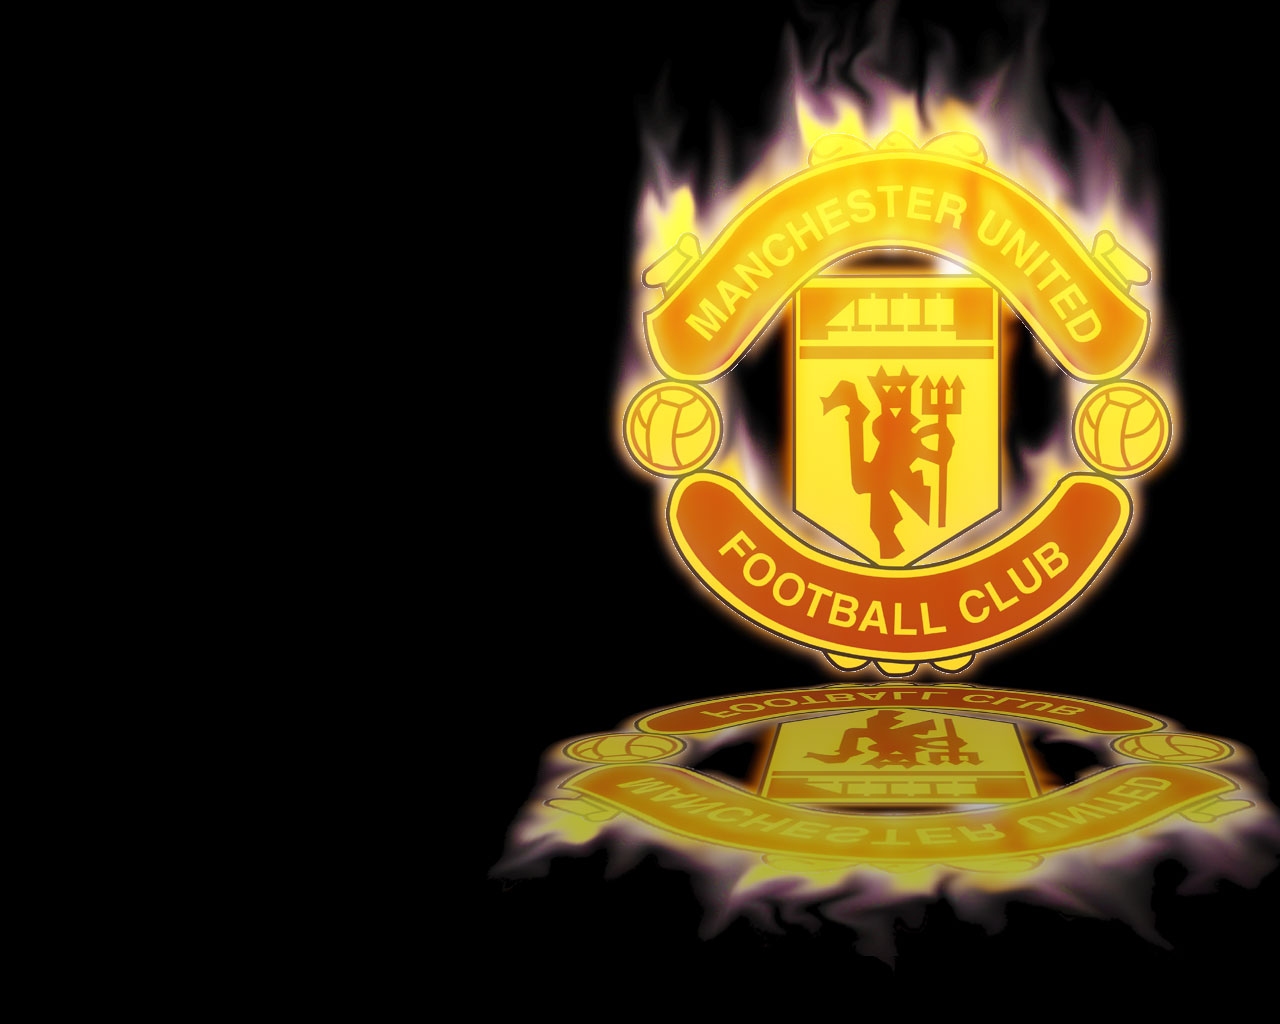 Manchester United: WALLPAPER